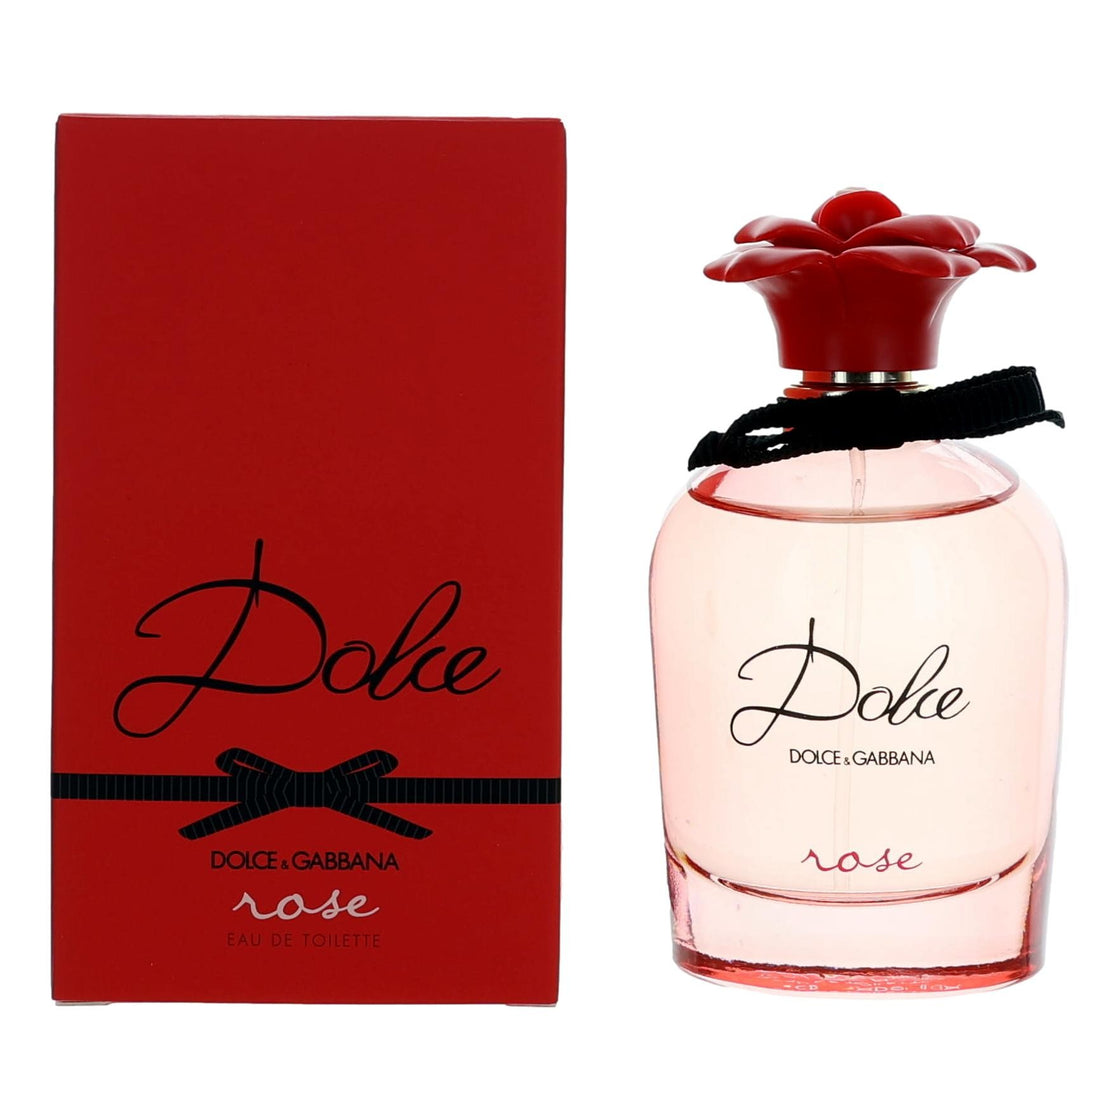 Dolce Rose By Dolce & Gabbana, 2.5 Oz Eau De Toilette Spray For Women